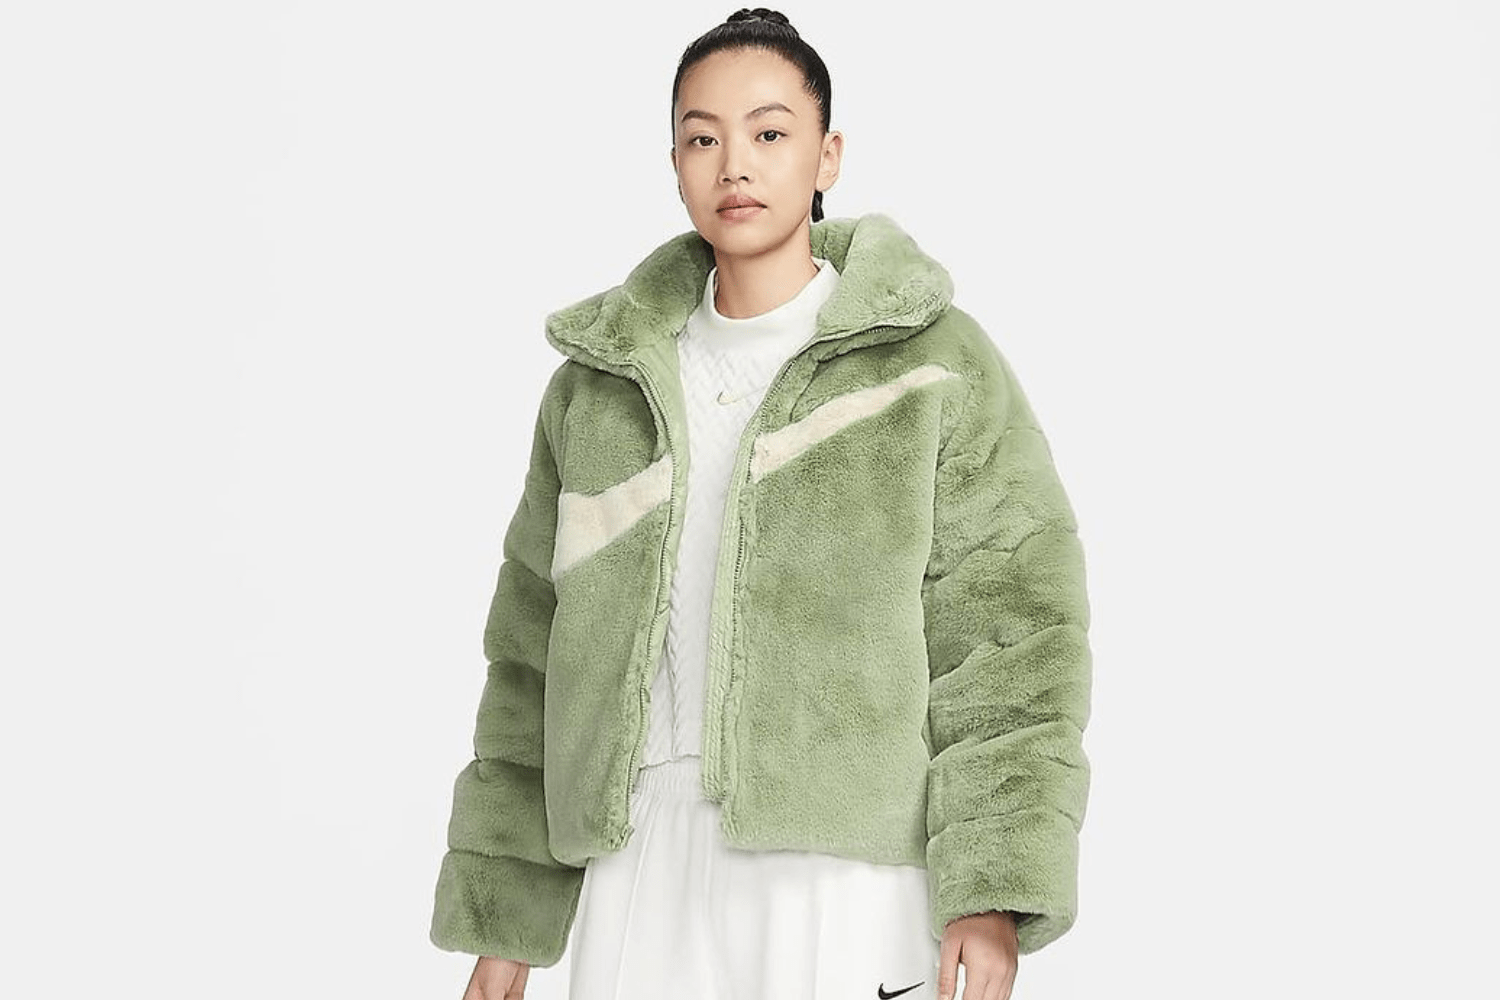 The Nike Big Swoosh returns on a puffer jacket